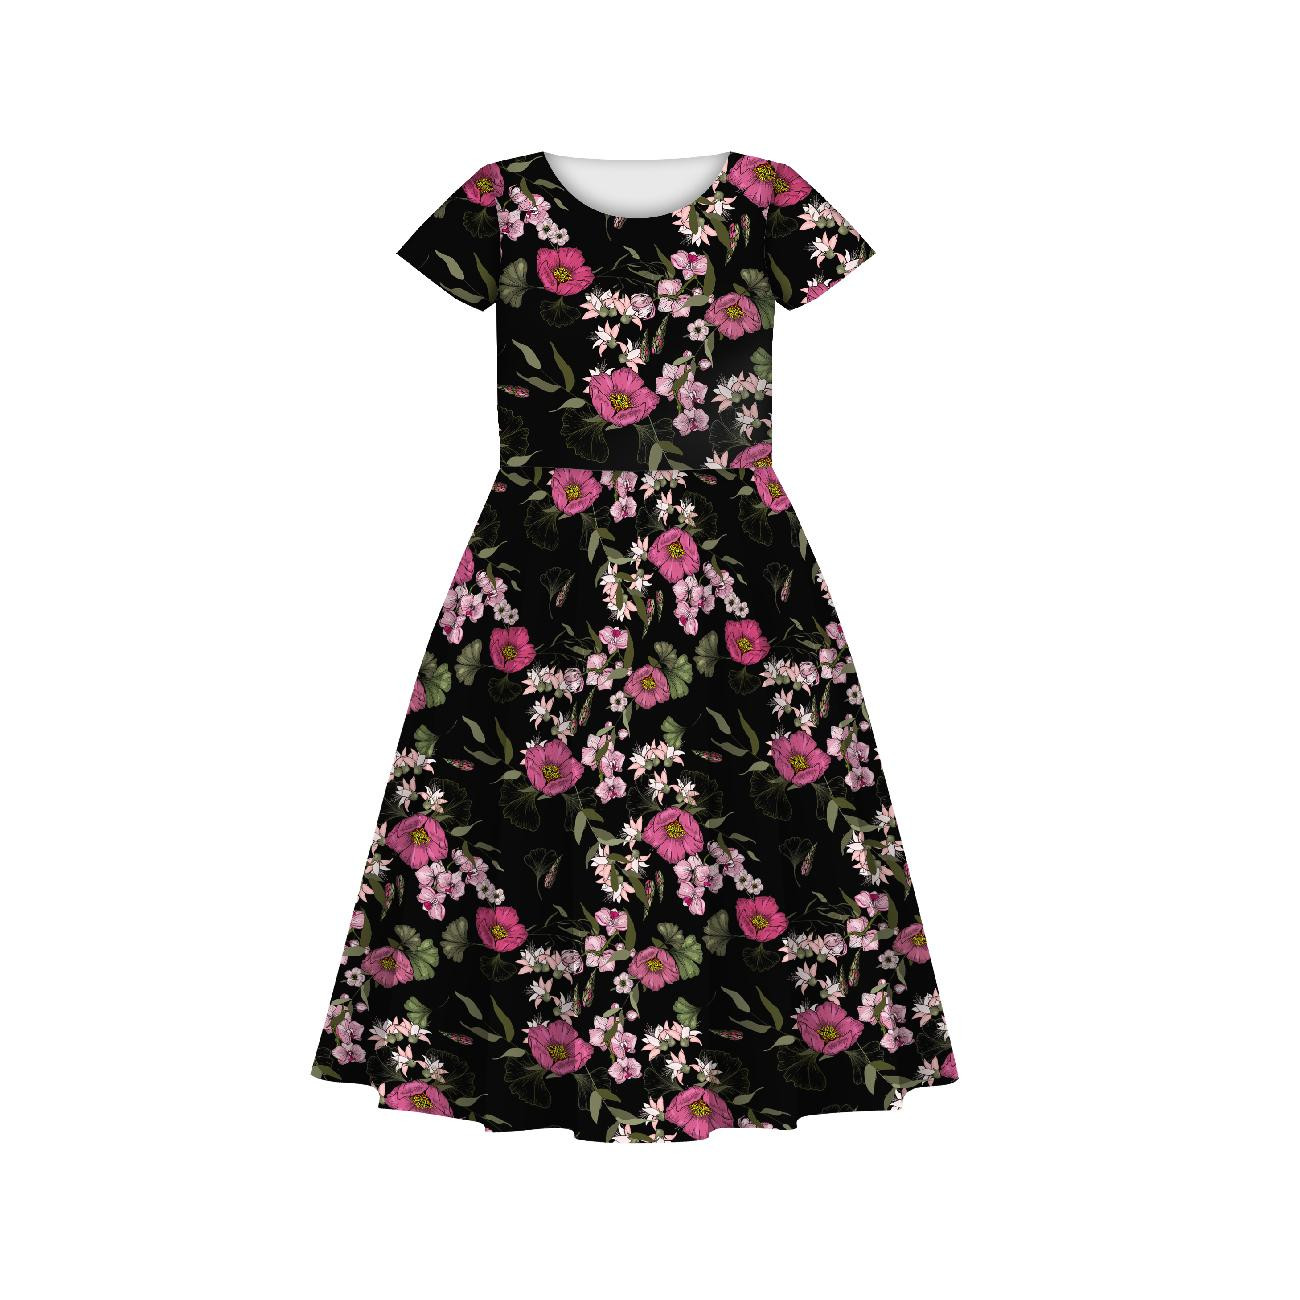 KID'S DRESS "MIA" - PINK FLOWERS PAT. 2 - sewing set